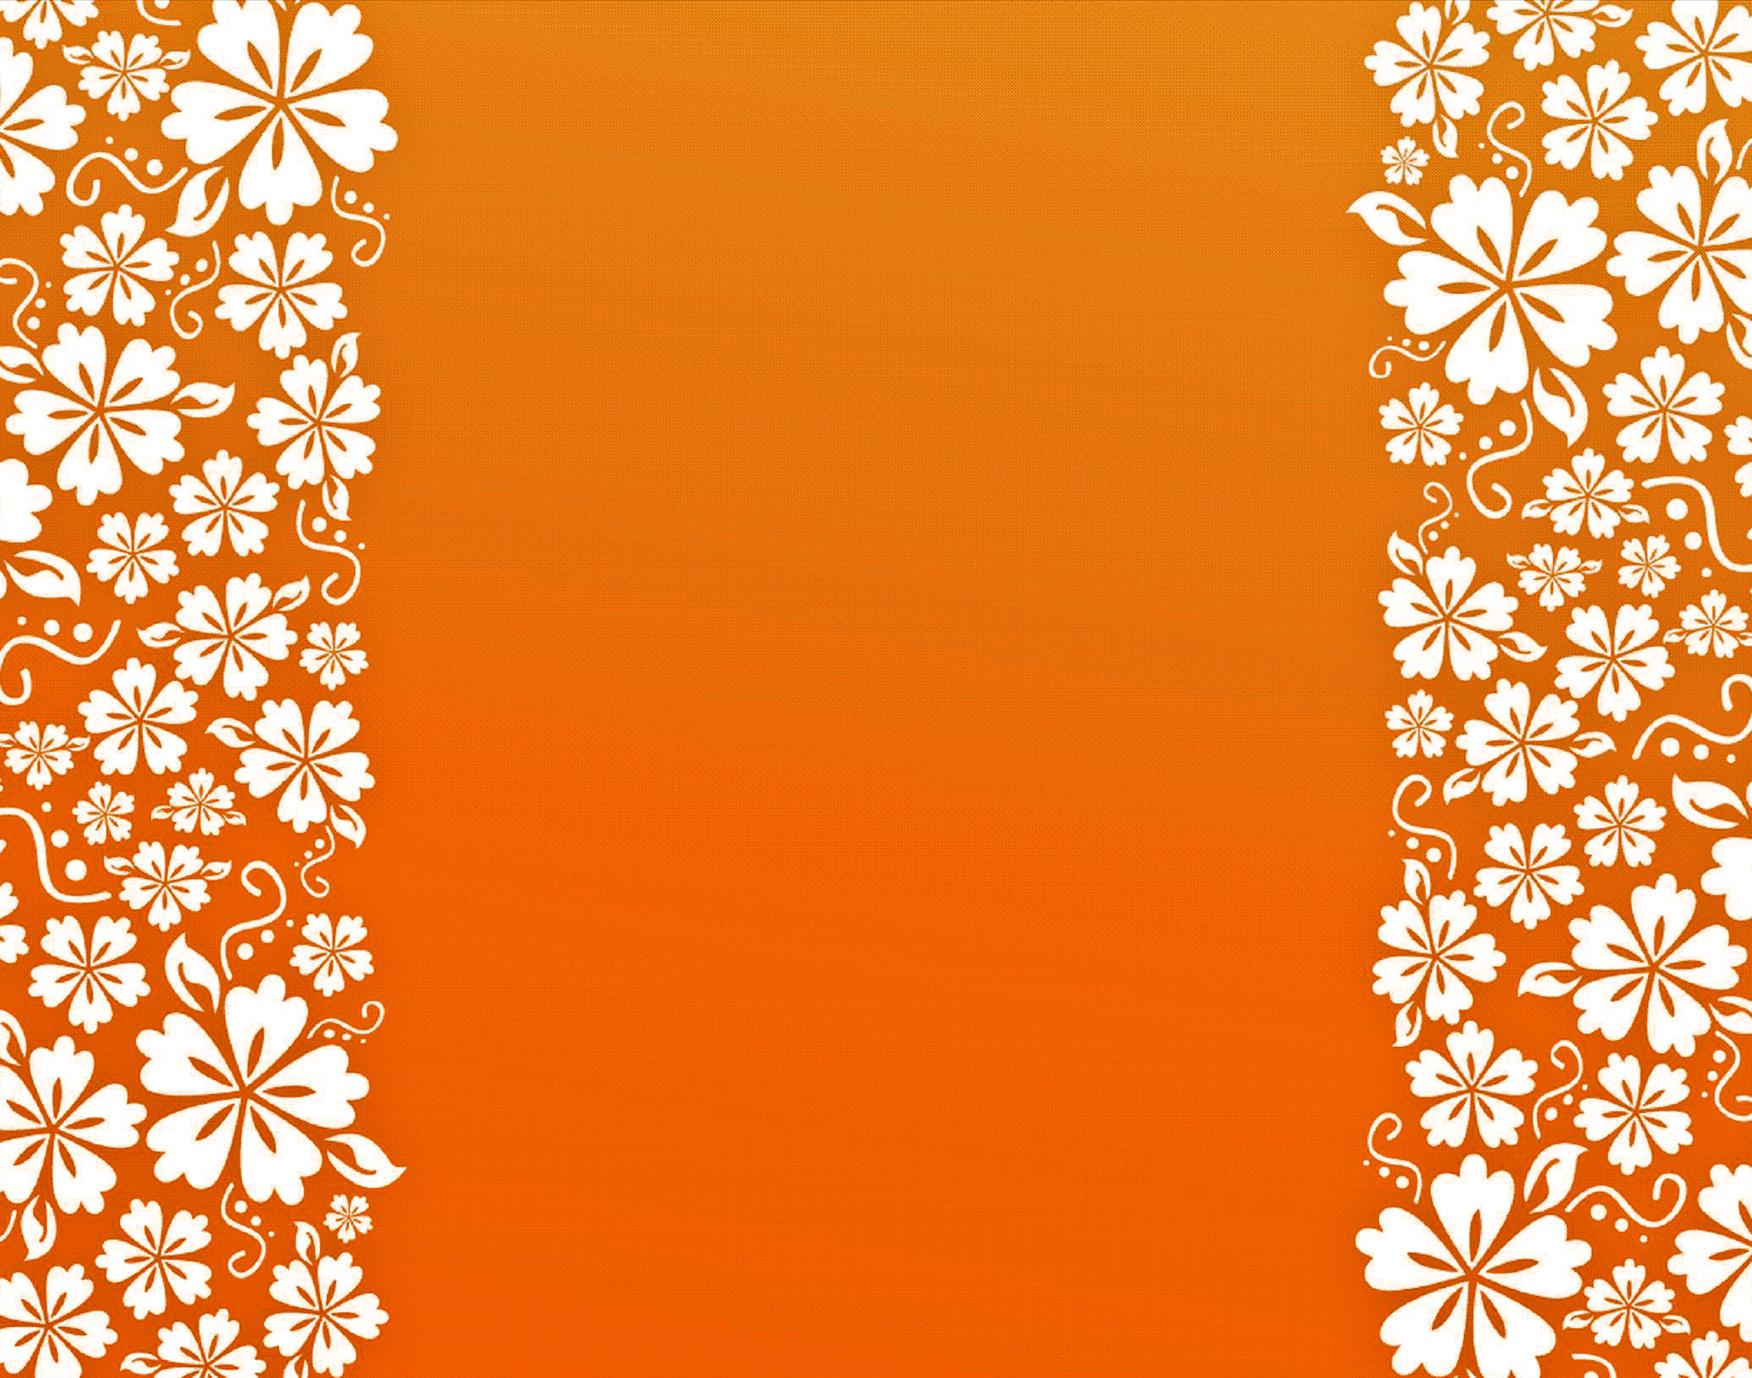 Free Download Border And Orange Background In The Design For Ppt Templates Orange 1752x1378 For Your Desktop Mobile Tablet Explore 48 Orange Wallpaper Border Orange Wallpaper For Walls Wallpaper